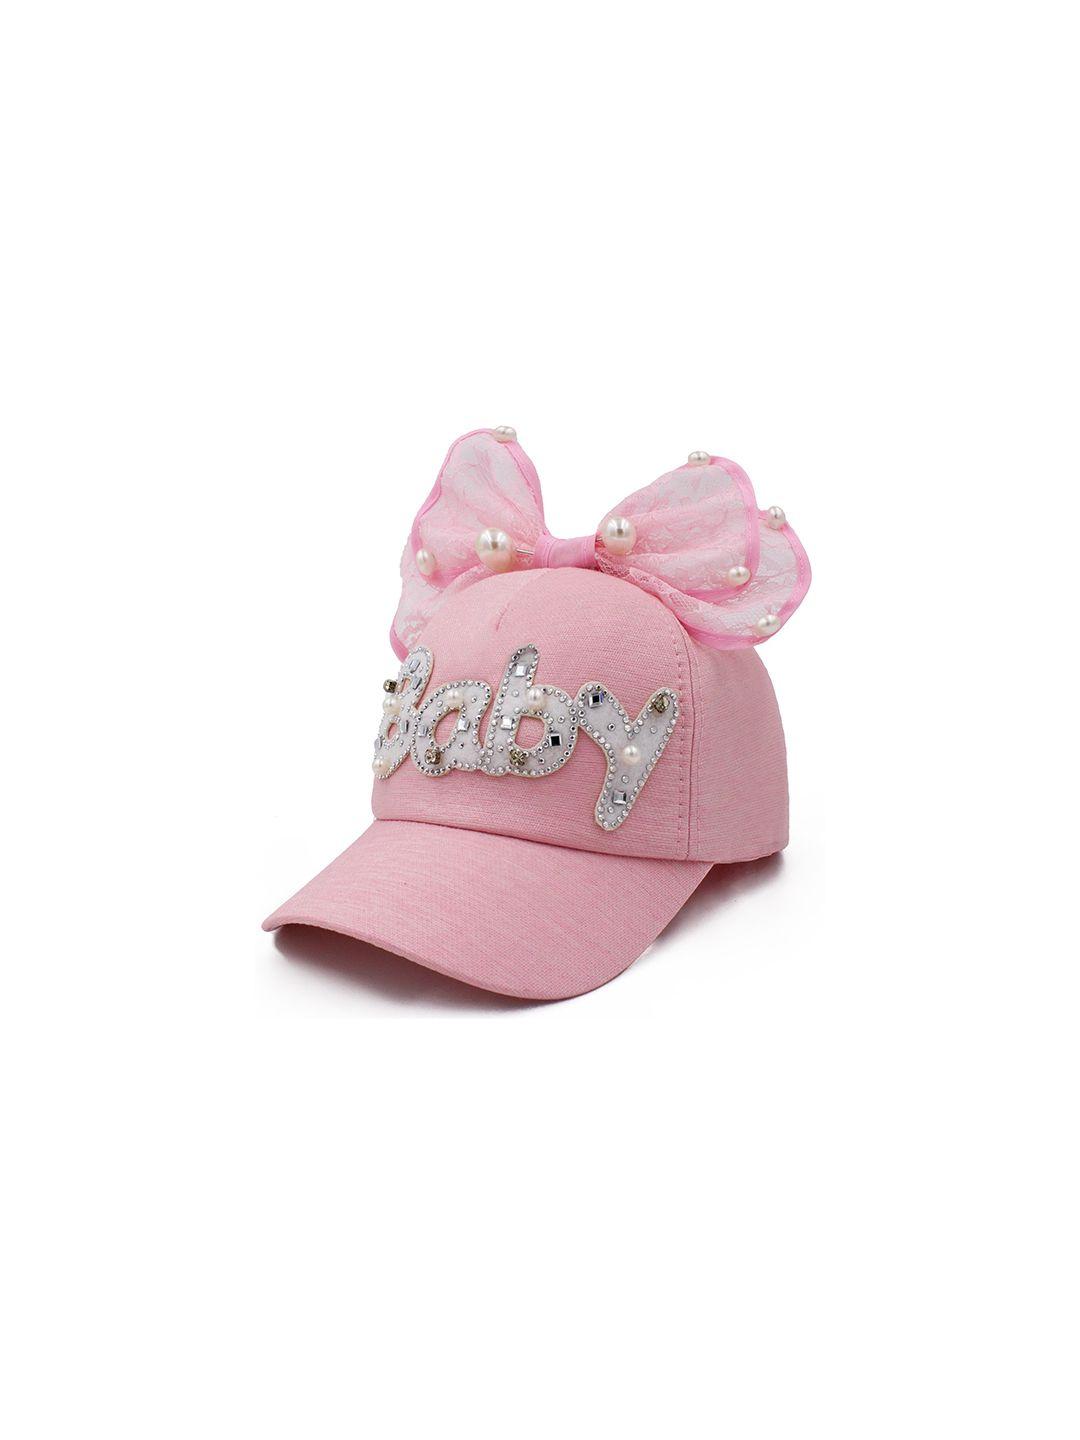 jenna boys pink & white embroidered baseball cap